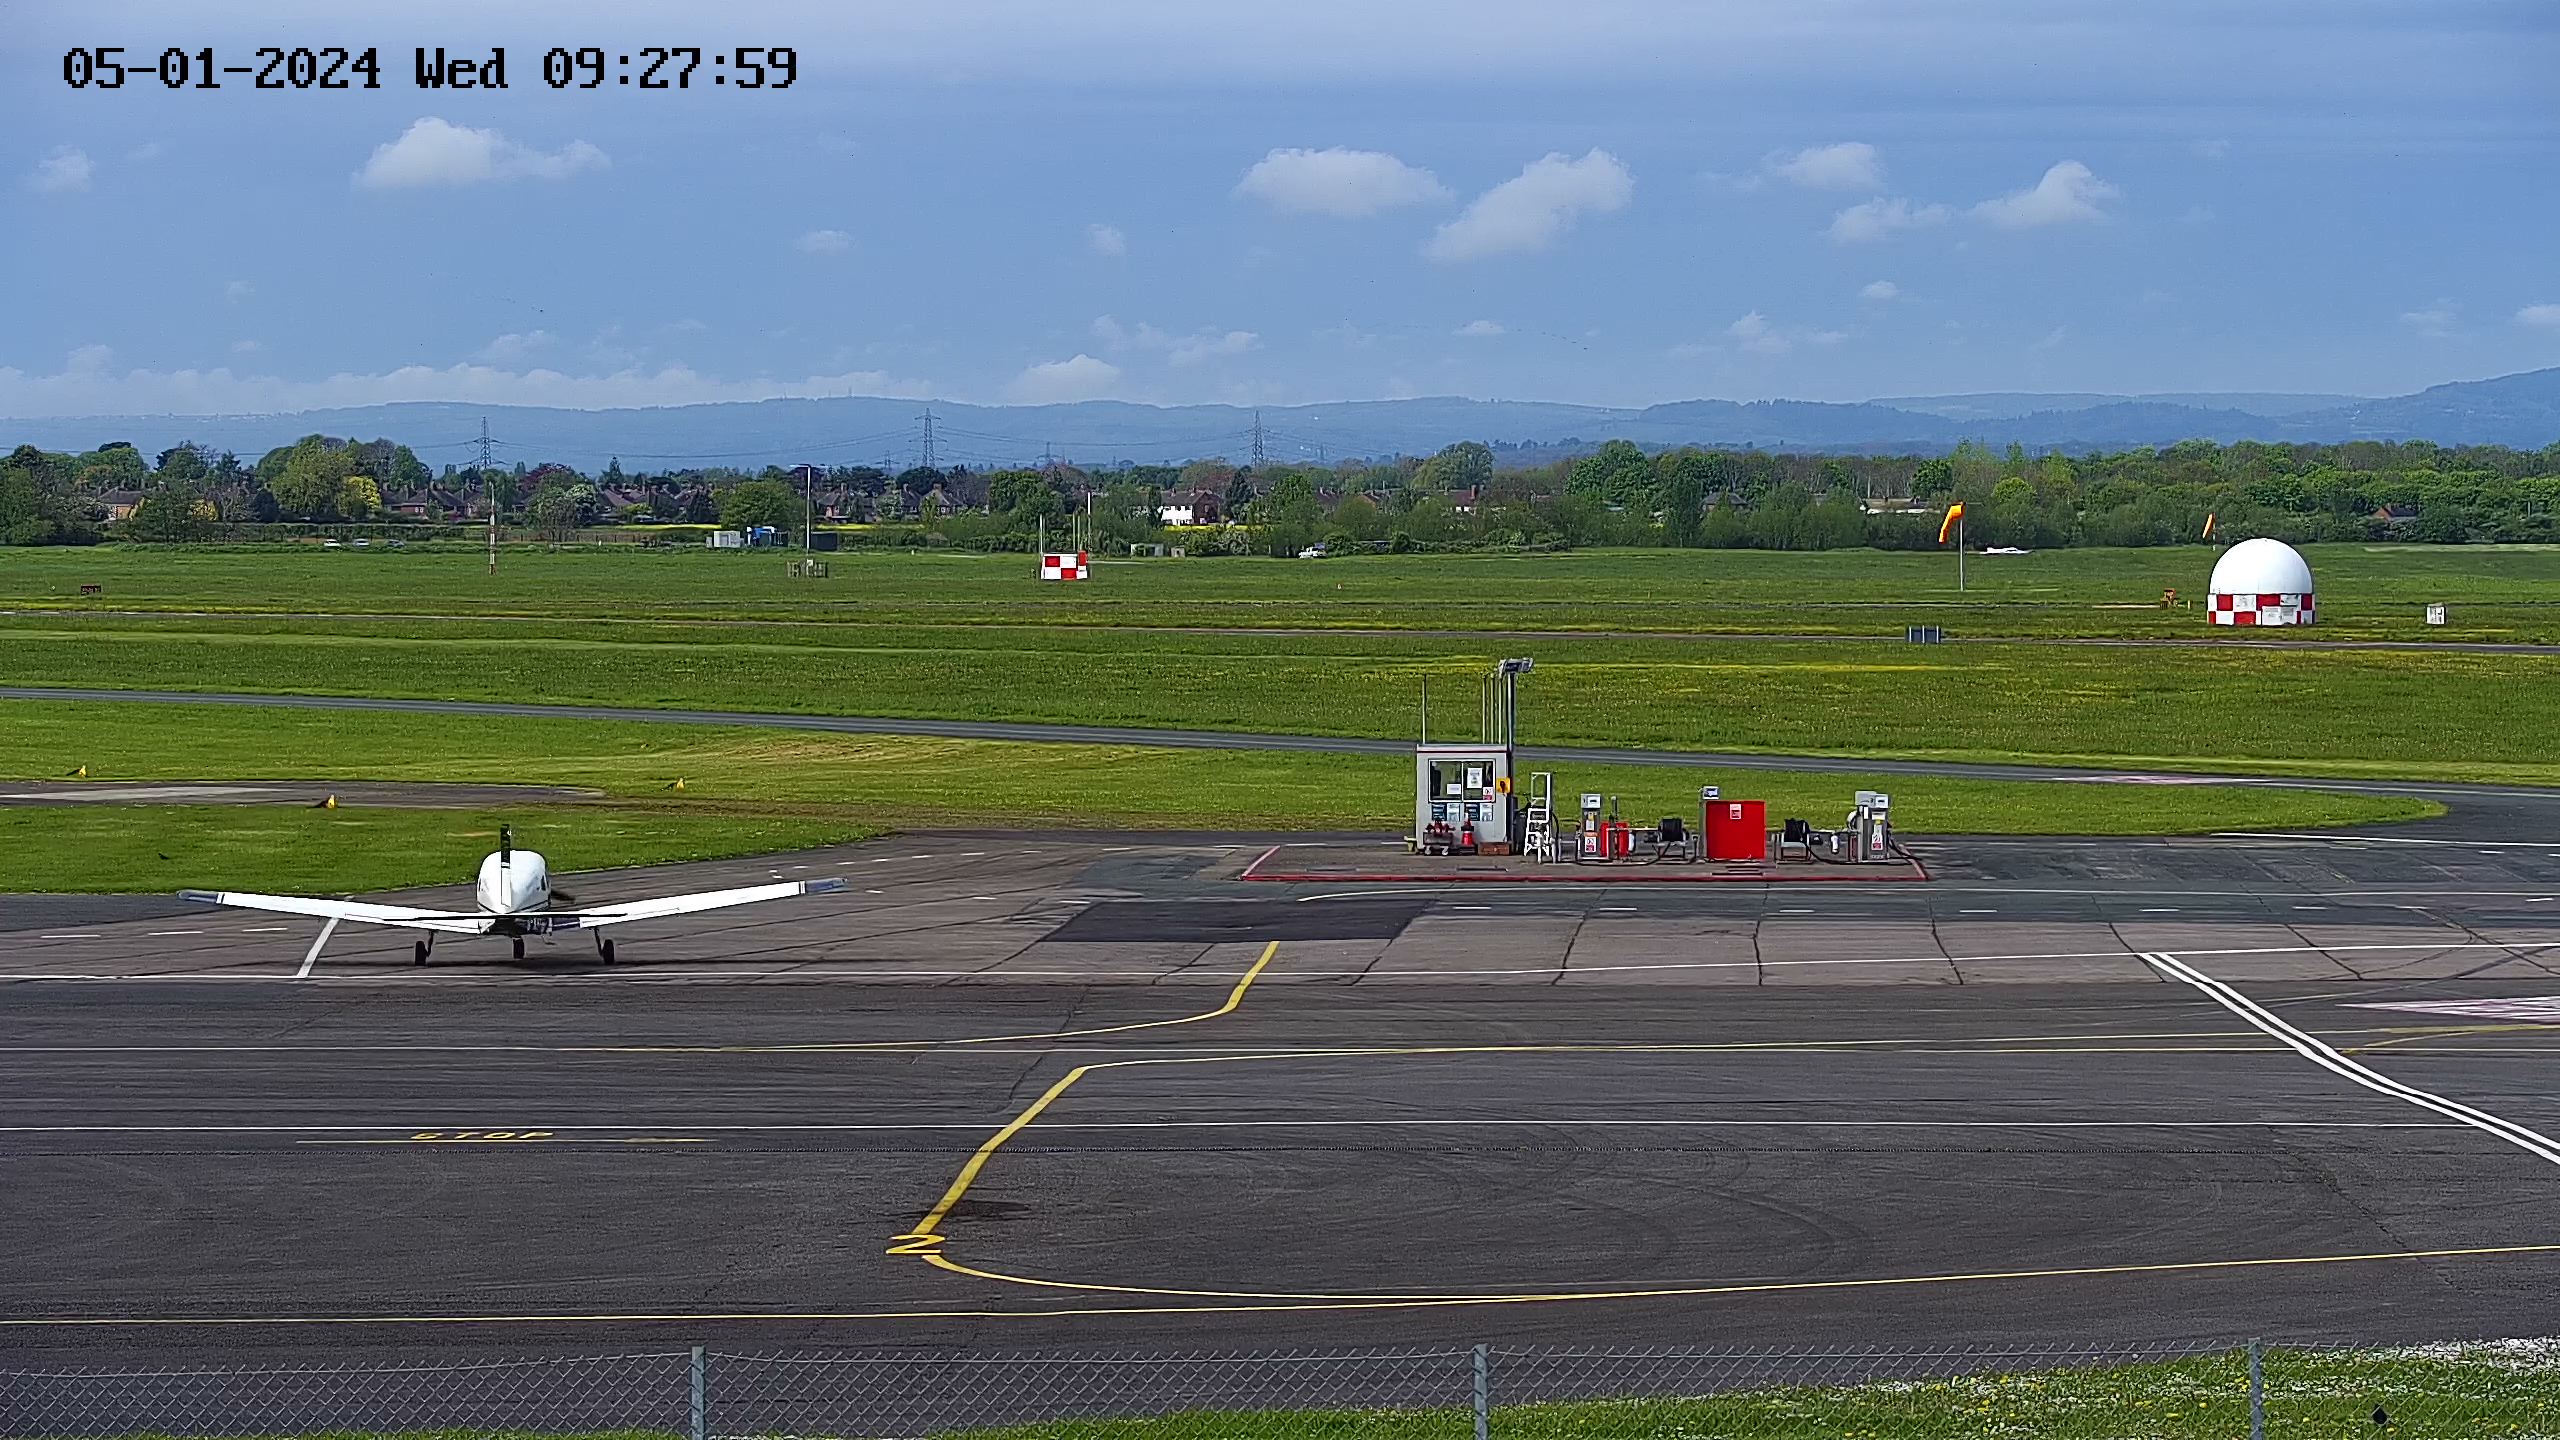 Cloucester Airfield, SW England - Webcam Image